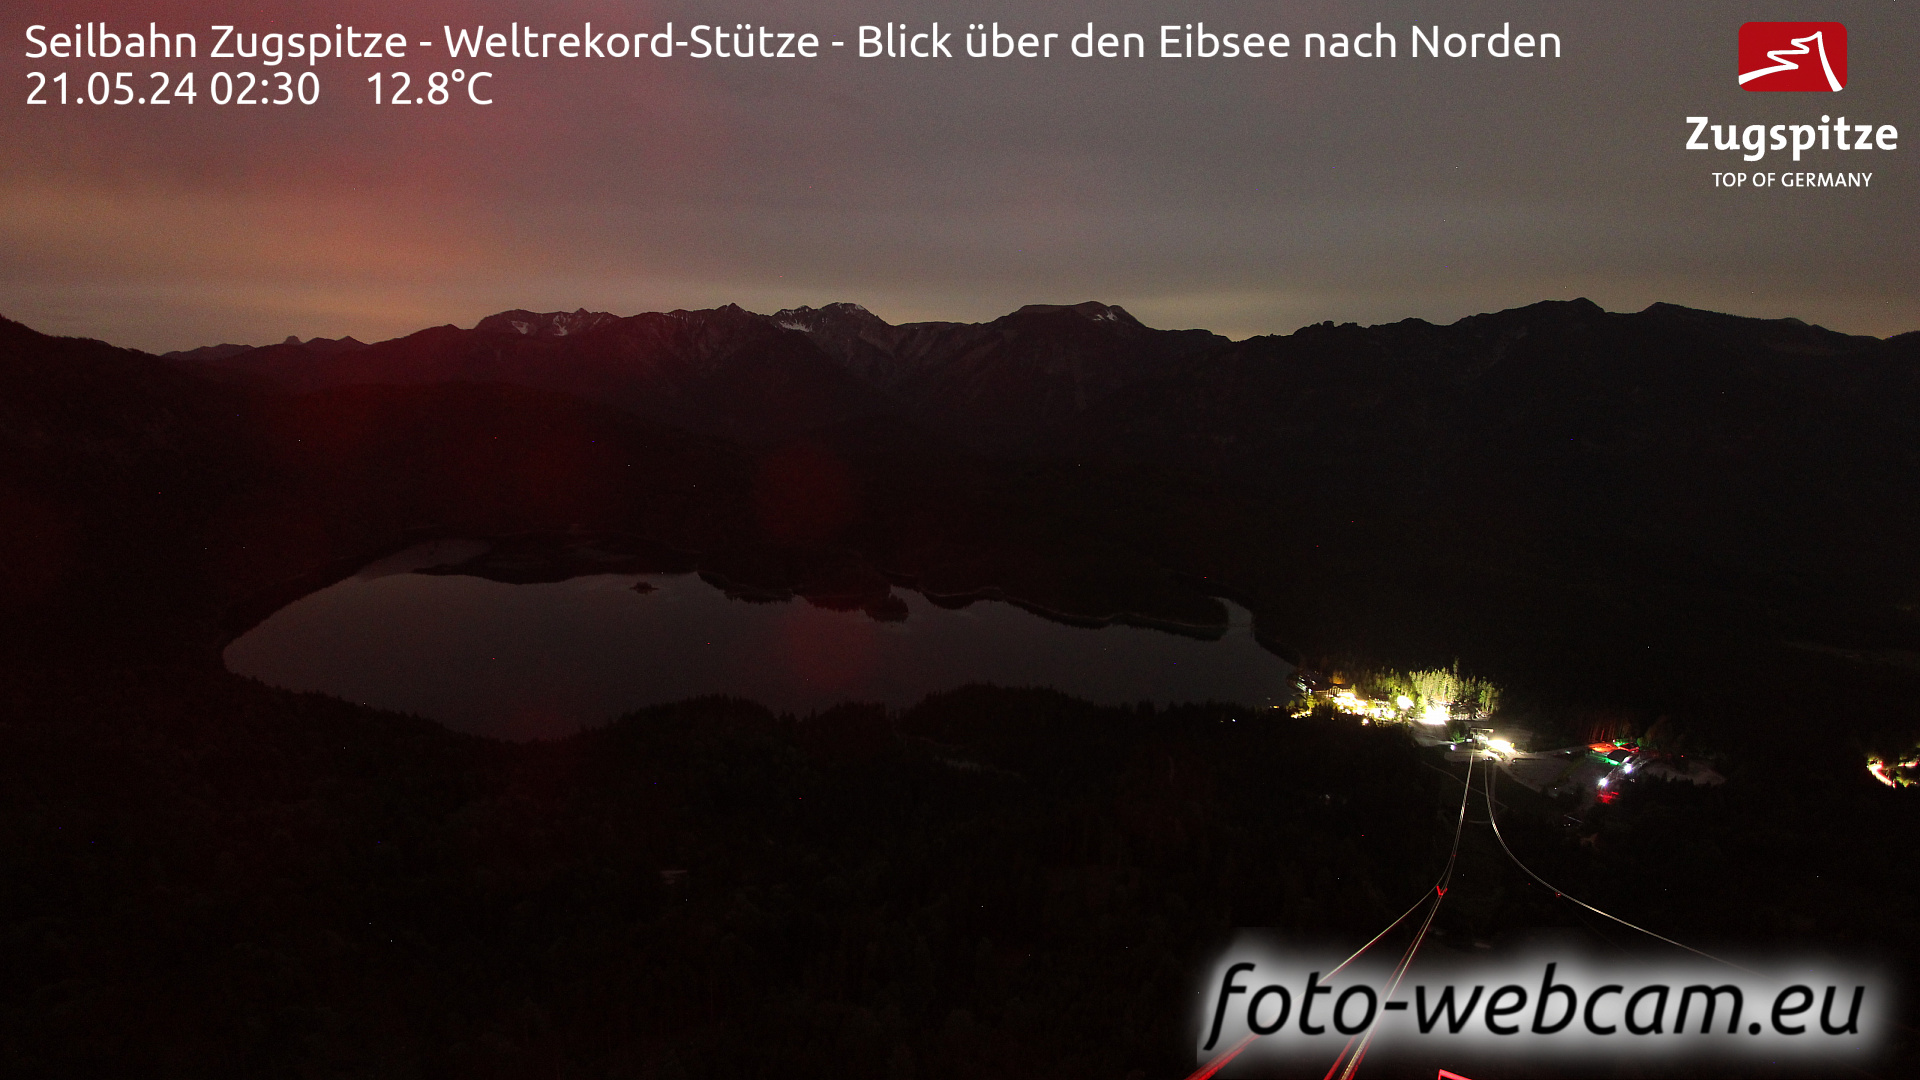 Zugspitze Ven. 02:49